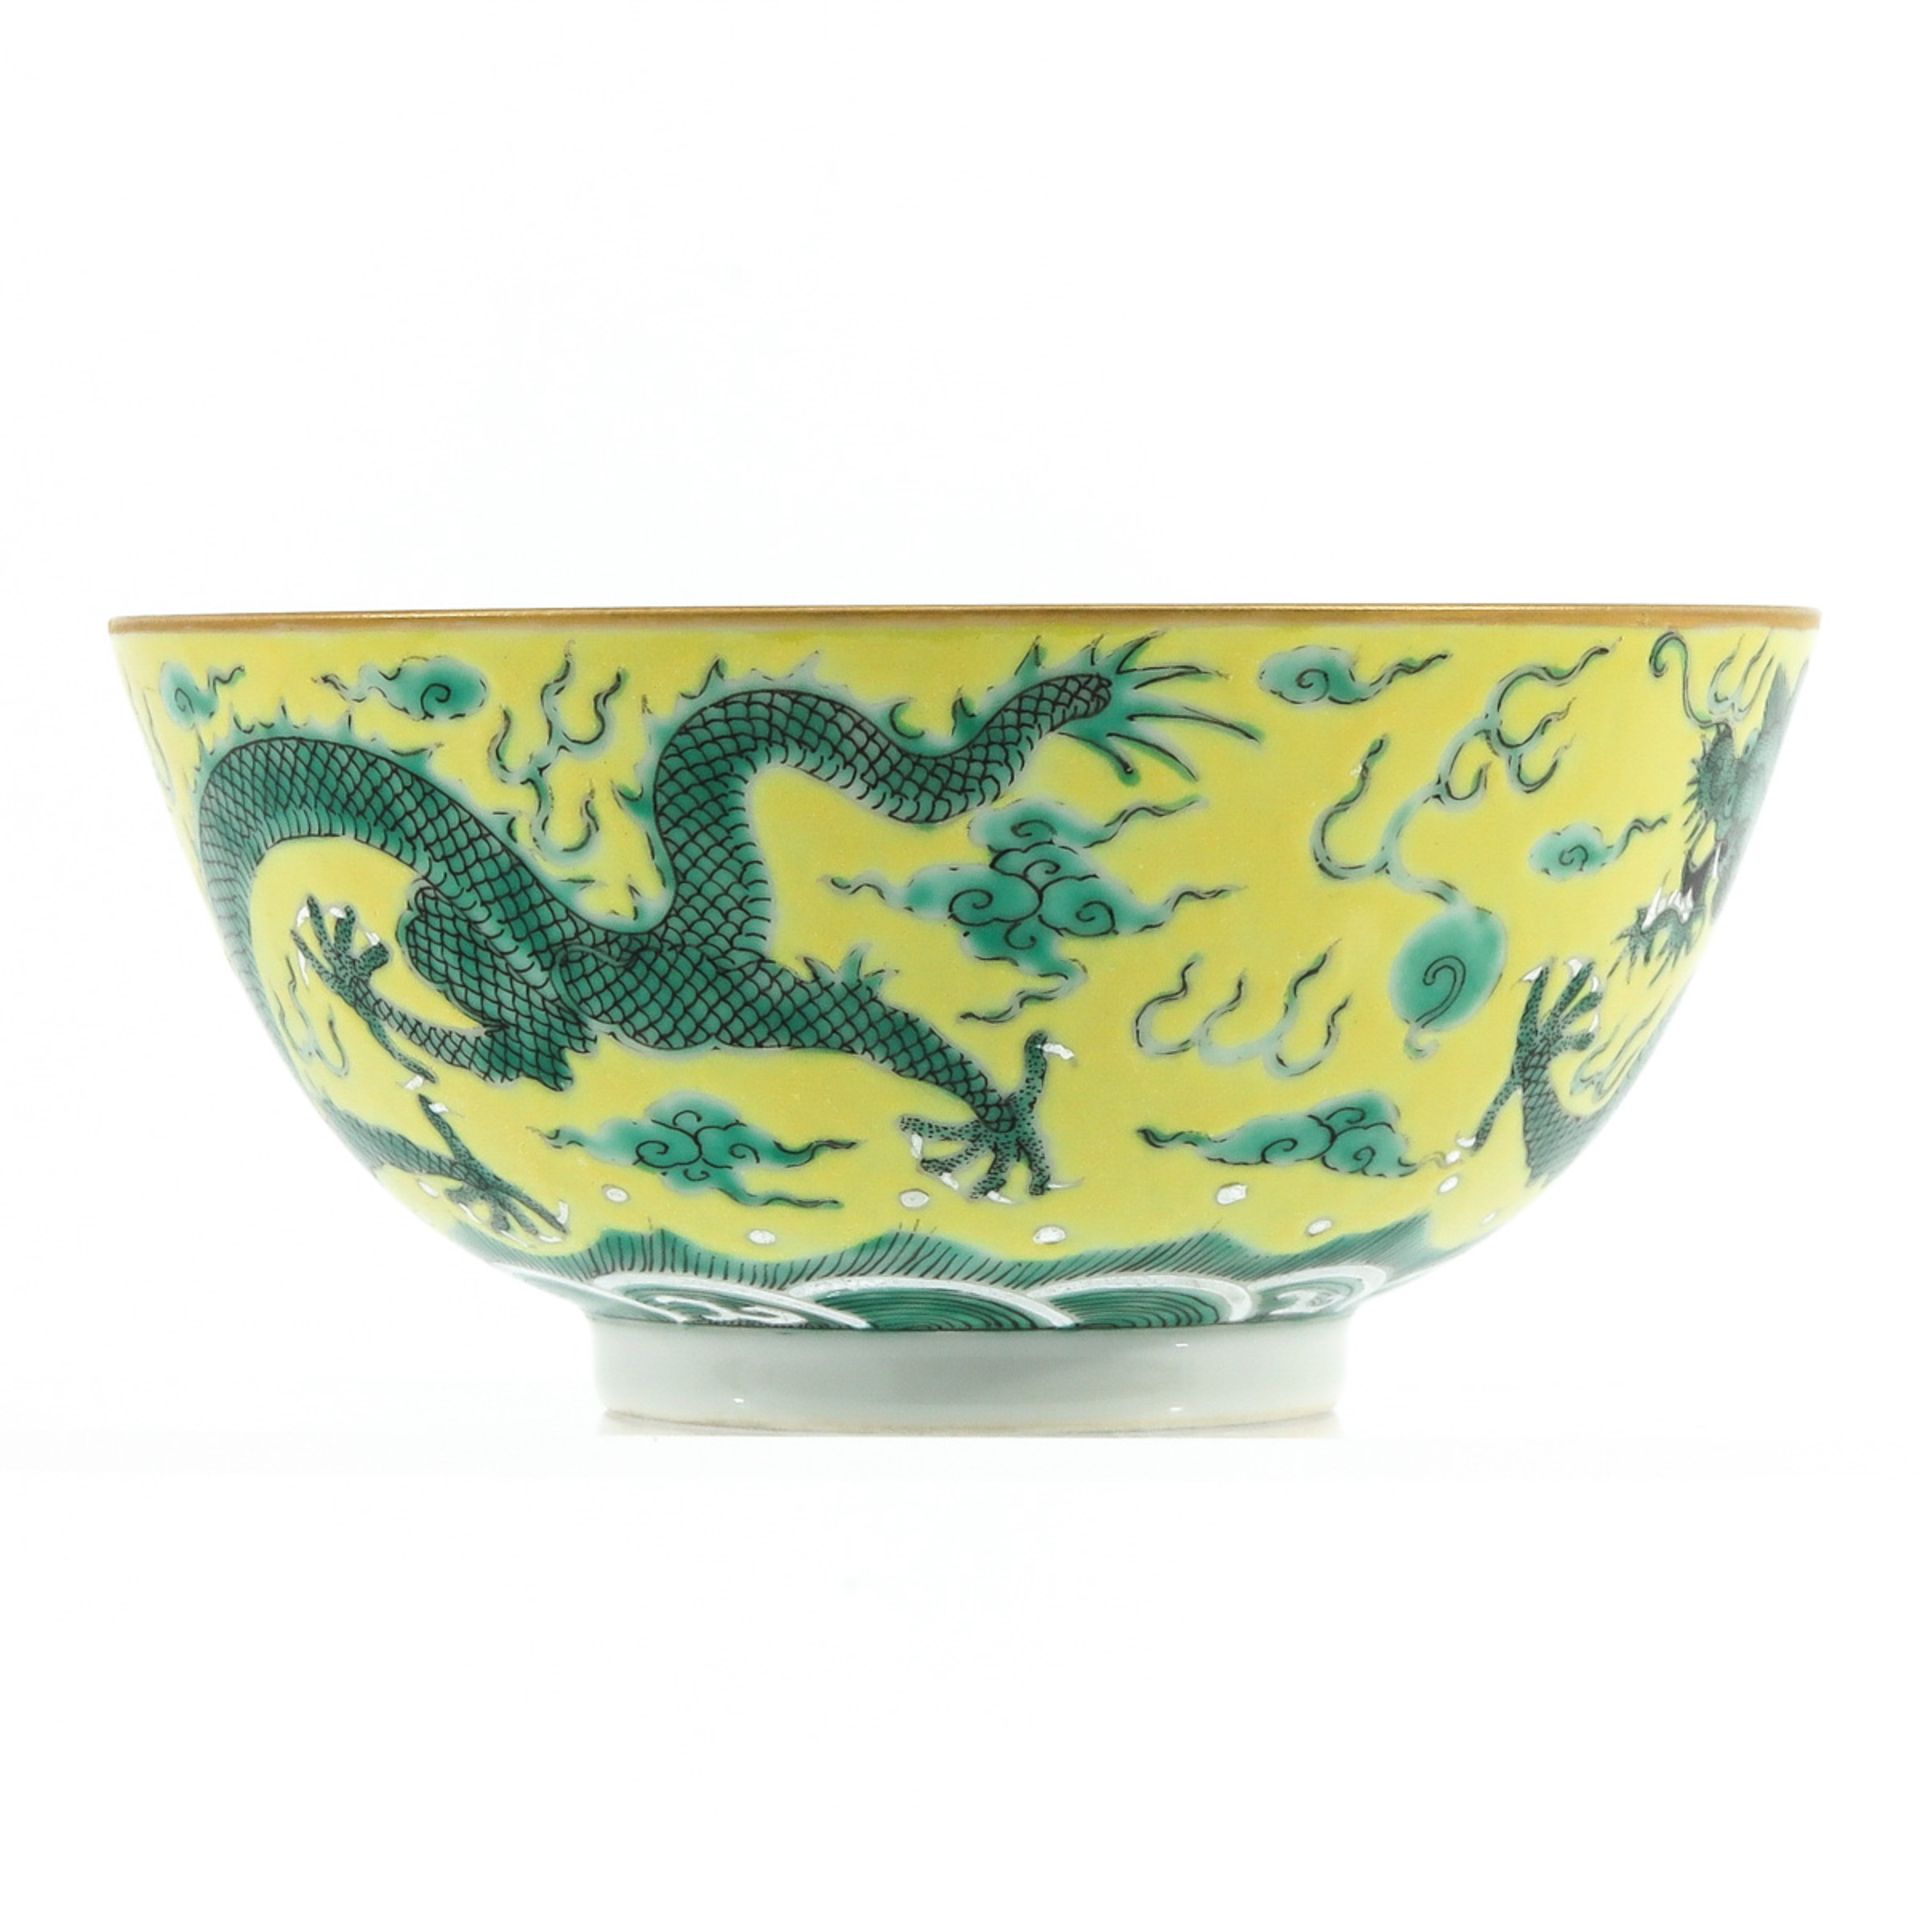 A Dragon Decor Bowl - Image 4 of 9